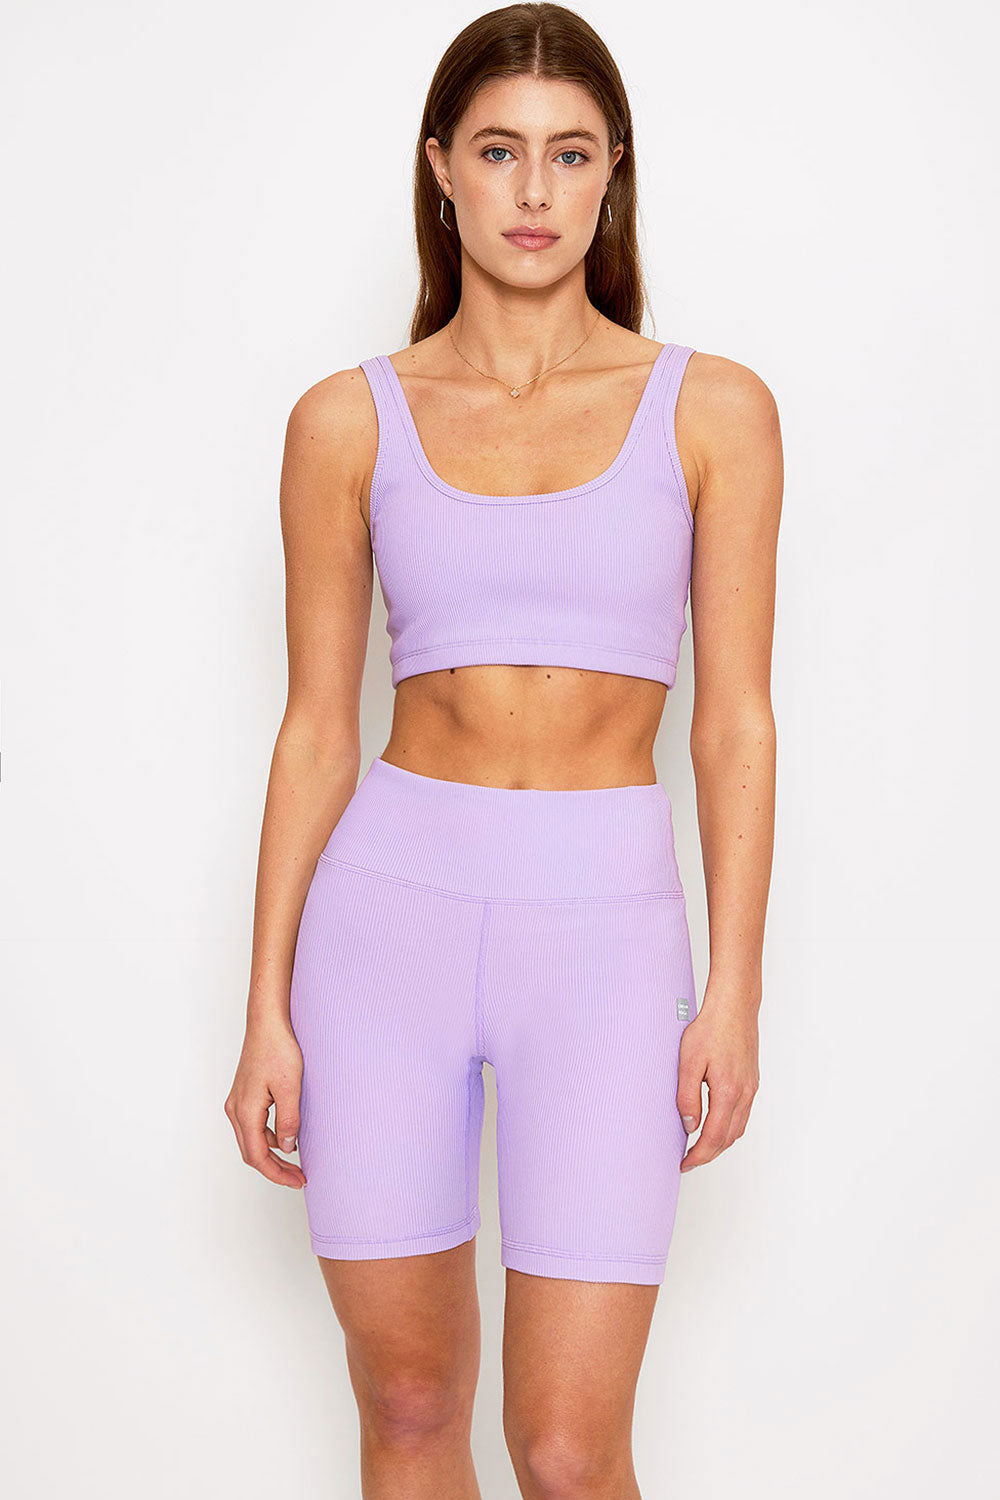 RQYYD Mesh Sports Bra for Women Longline Padded Bra Yoga Crop Tank Tops  Fitness Workout Running Top Purple XL 